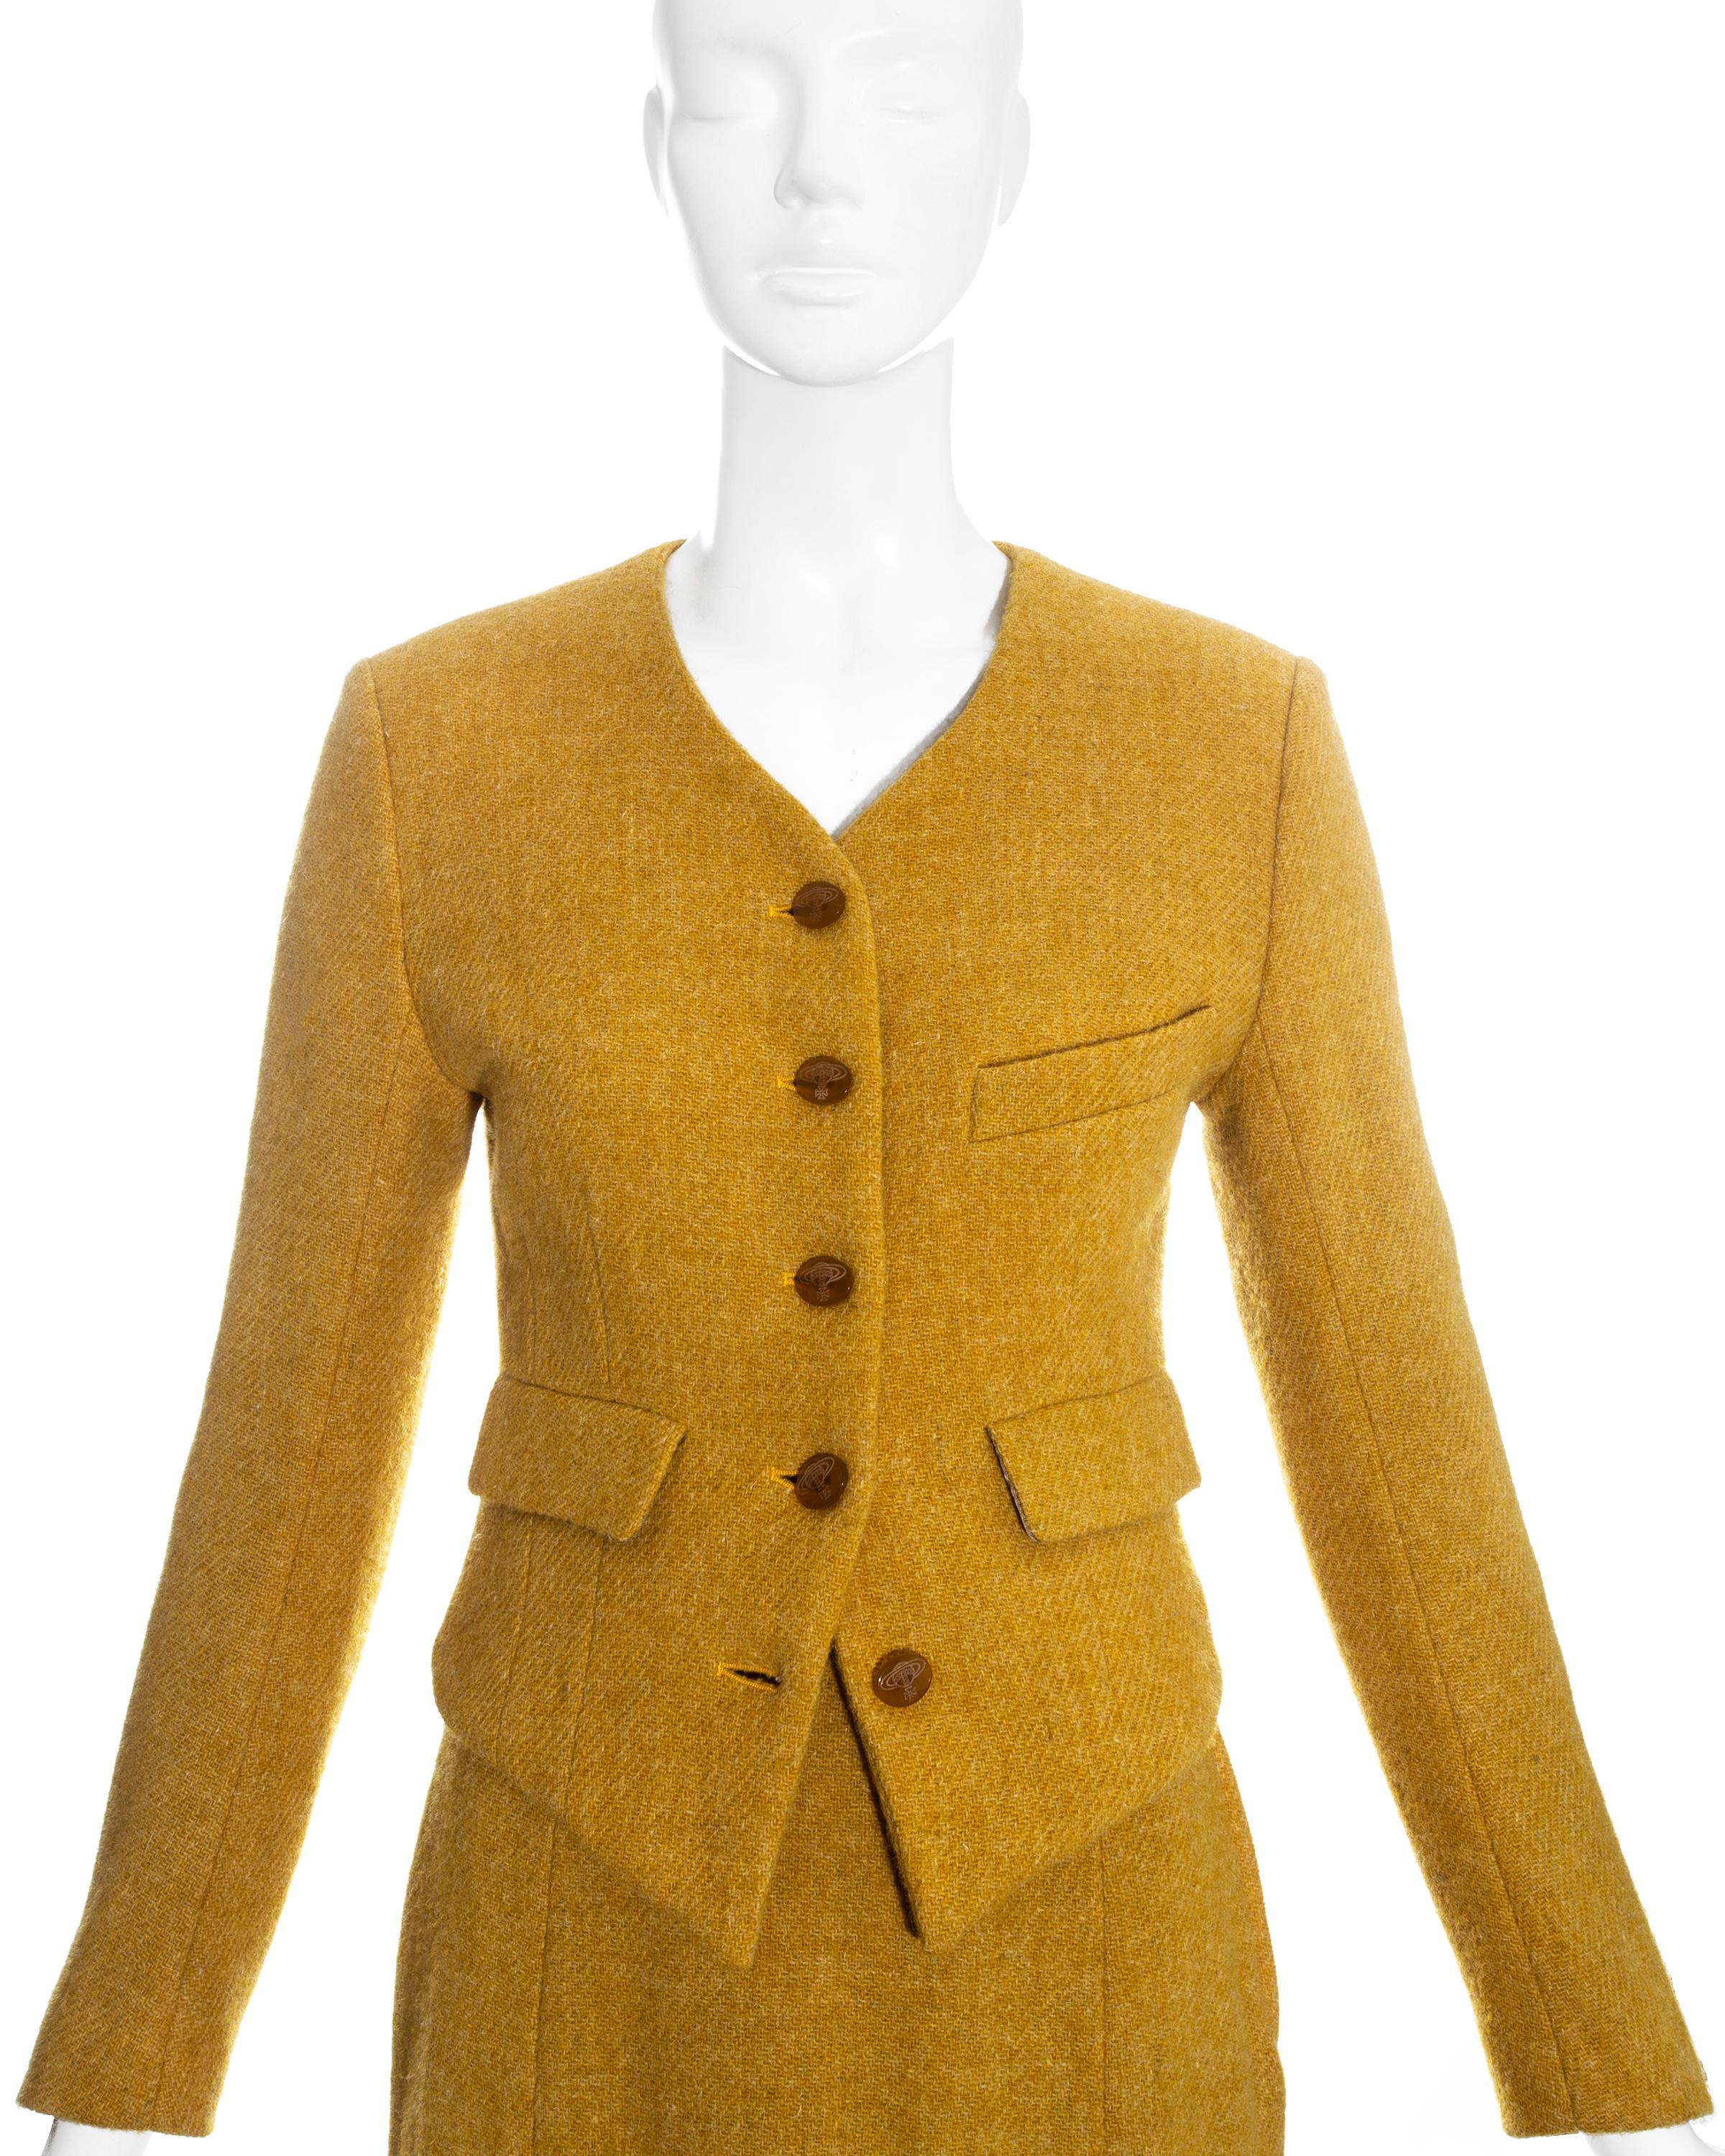 Mustard yellow wool knee-length skirt suit by Vivienne Westwood

Fall-winter 1994